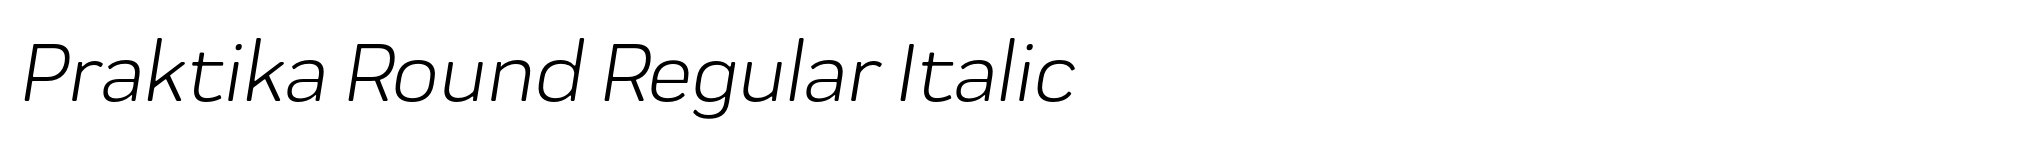 Praktika Round Regular Italic image